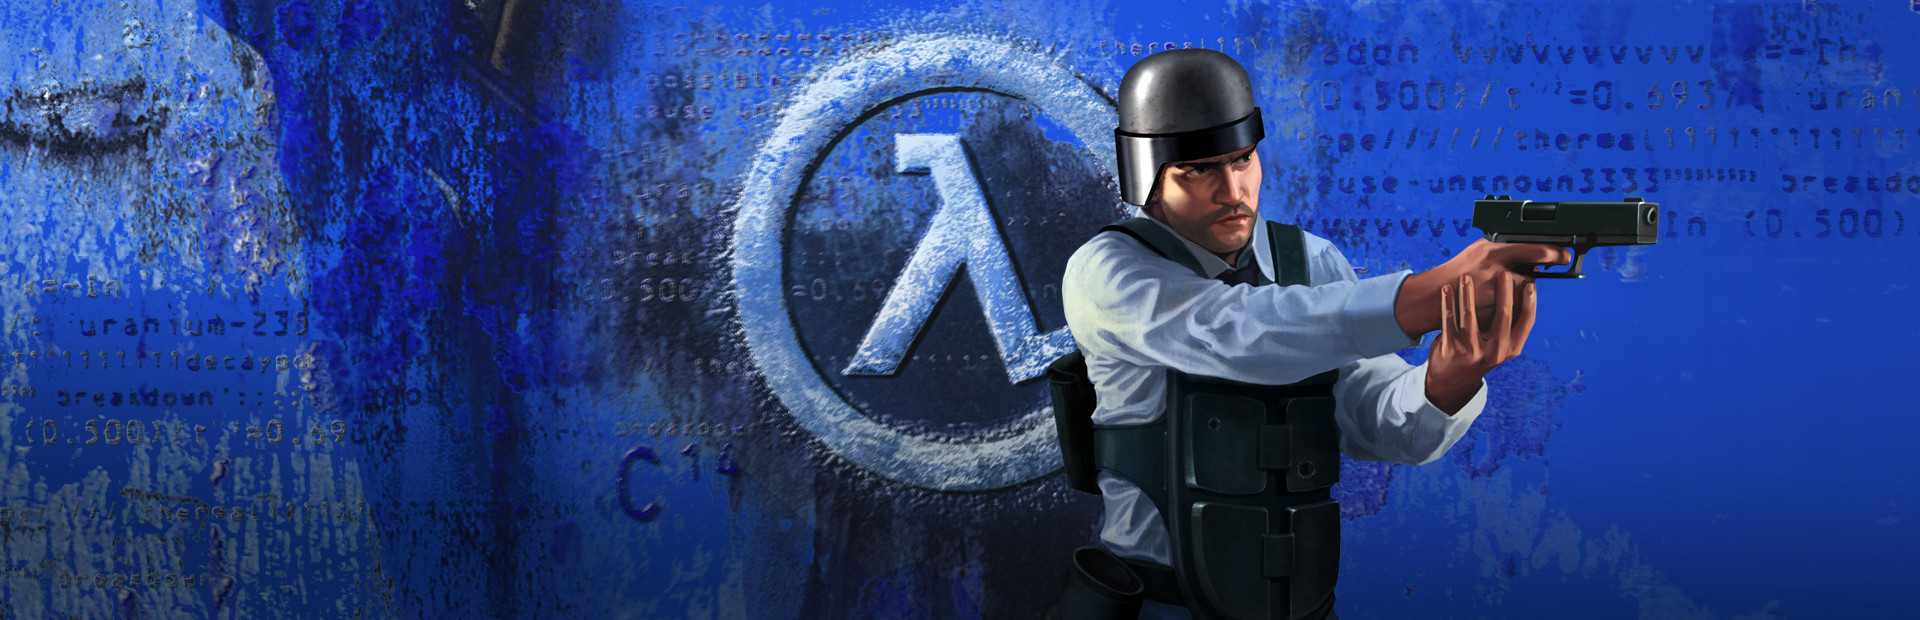 Half-Life: Blue Shift cover image